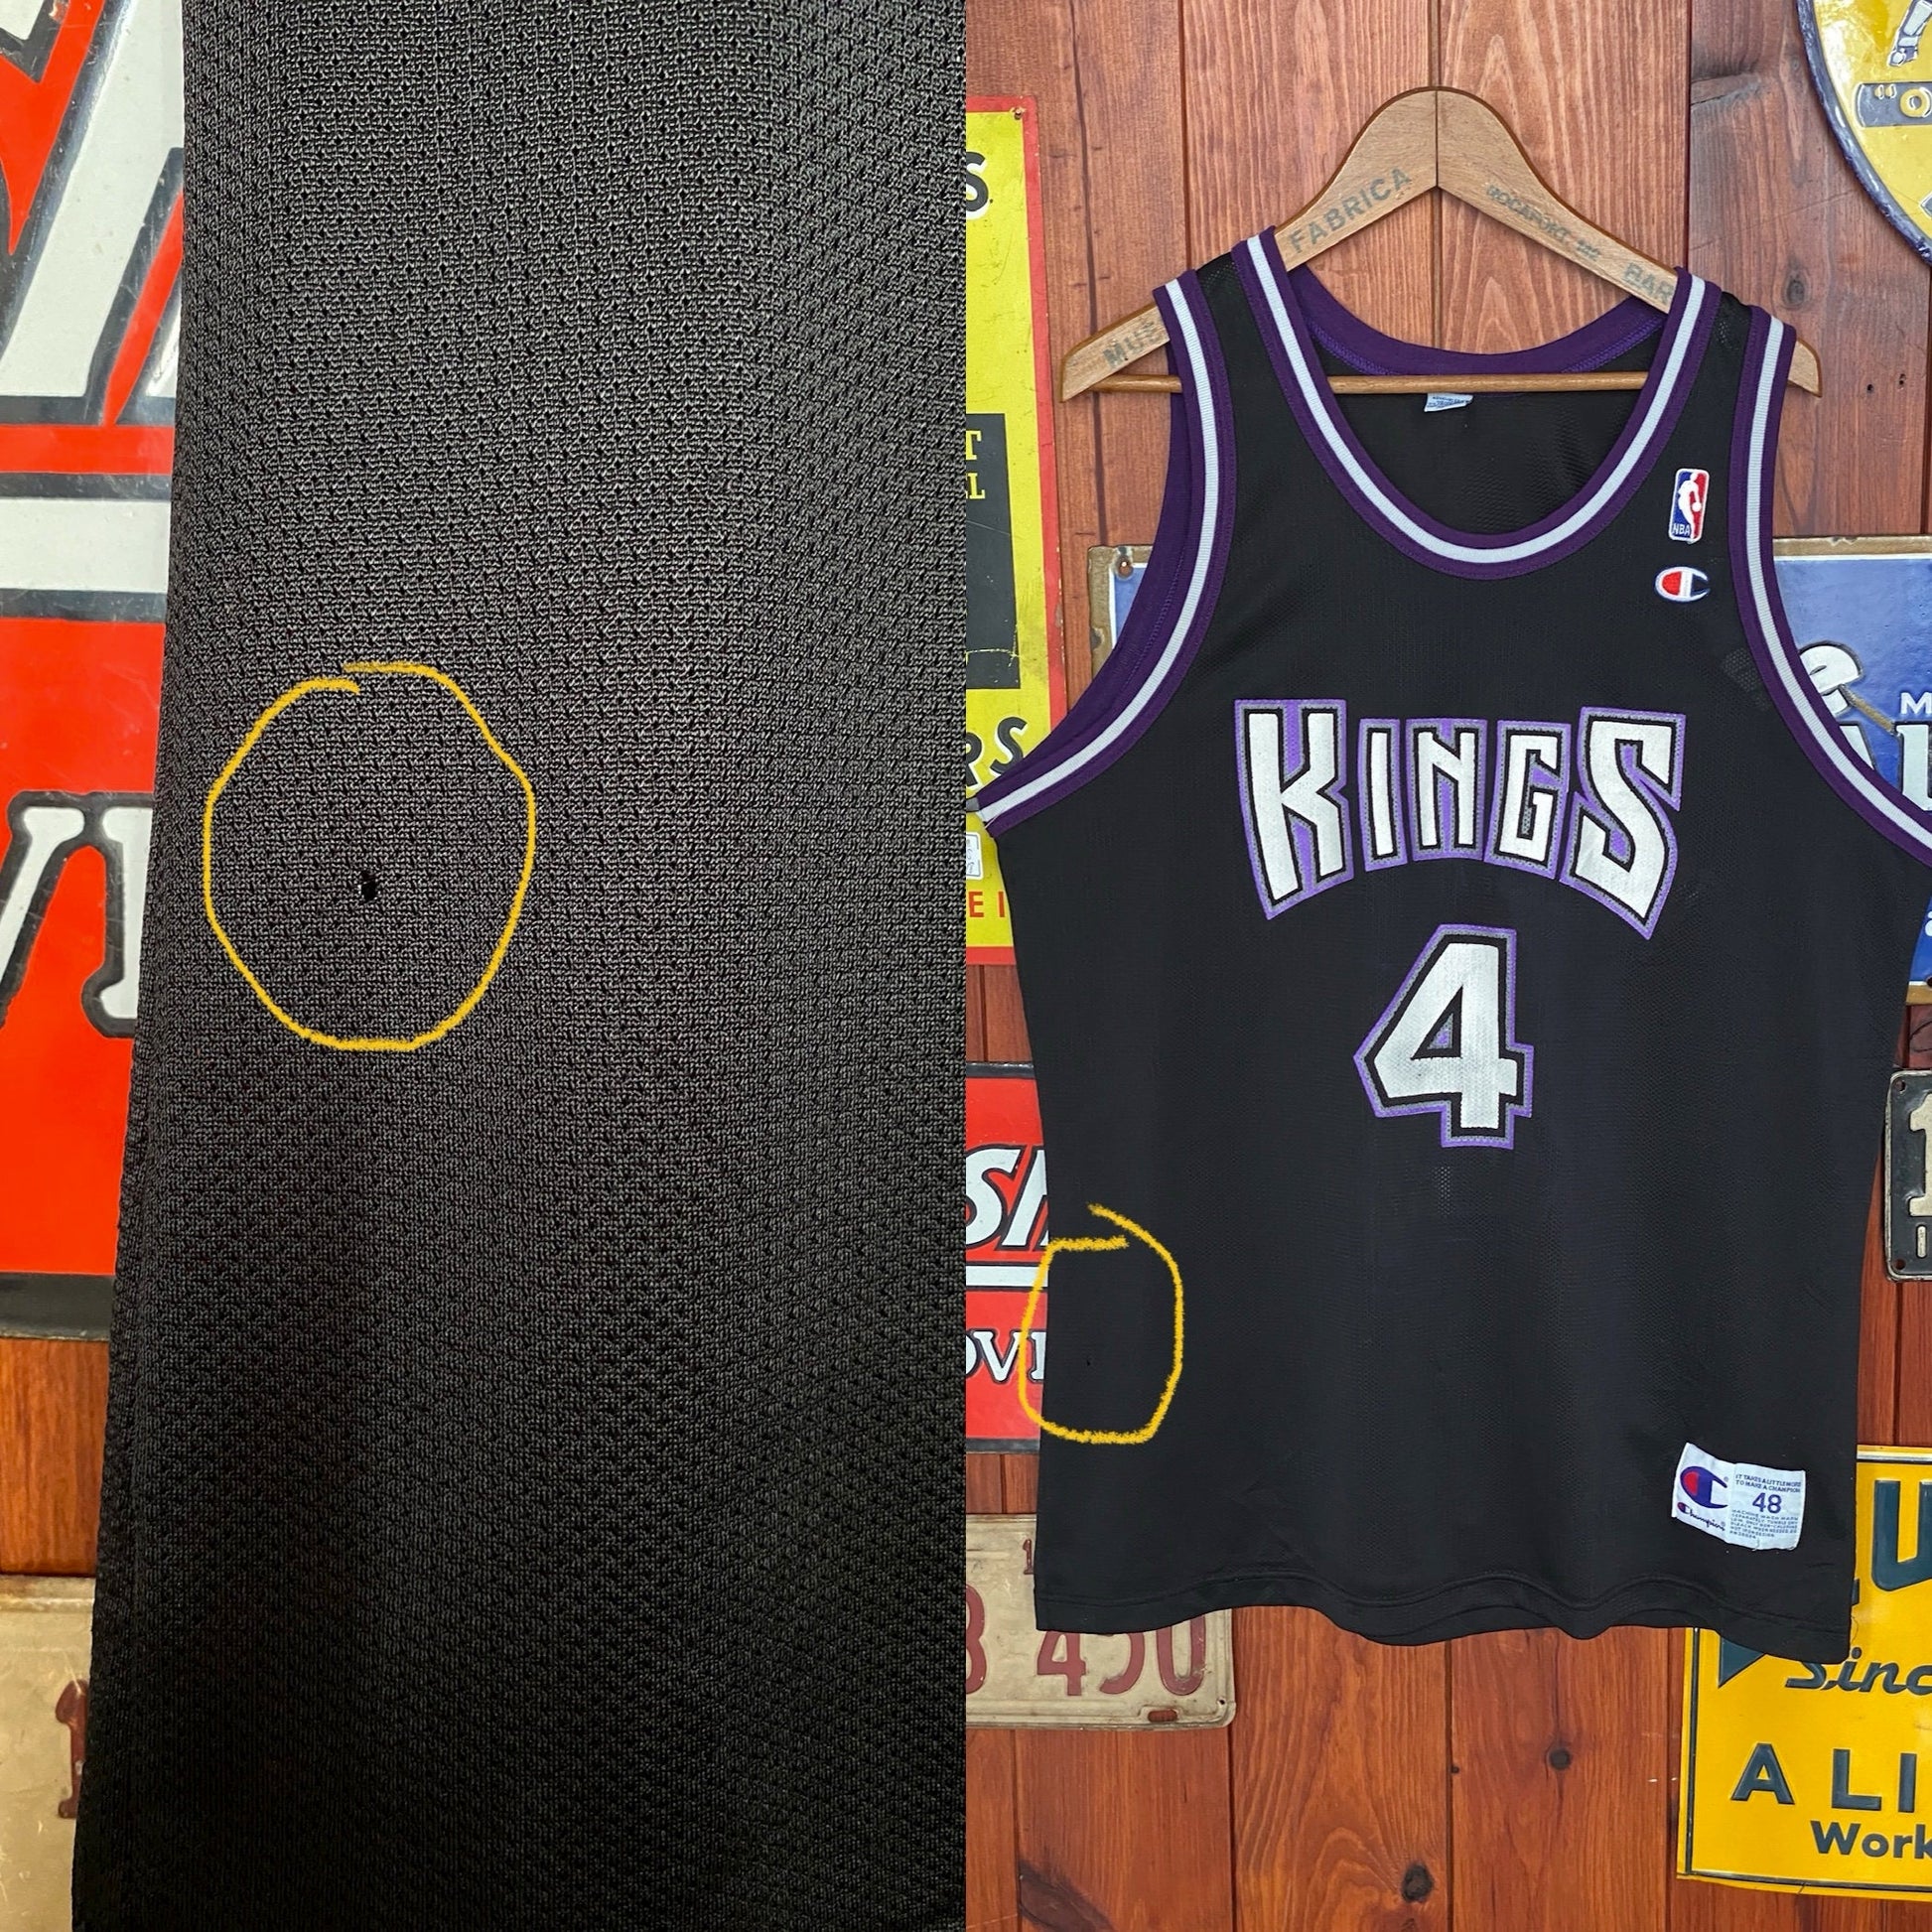 90s Vintage Kings NBA Jersey, #4 Williamson Champion Jersey, Size 48, Authentic NBA Jersey, Sports Memorabilia, Basketball Apparel